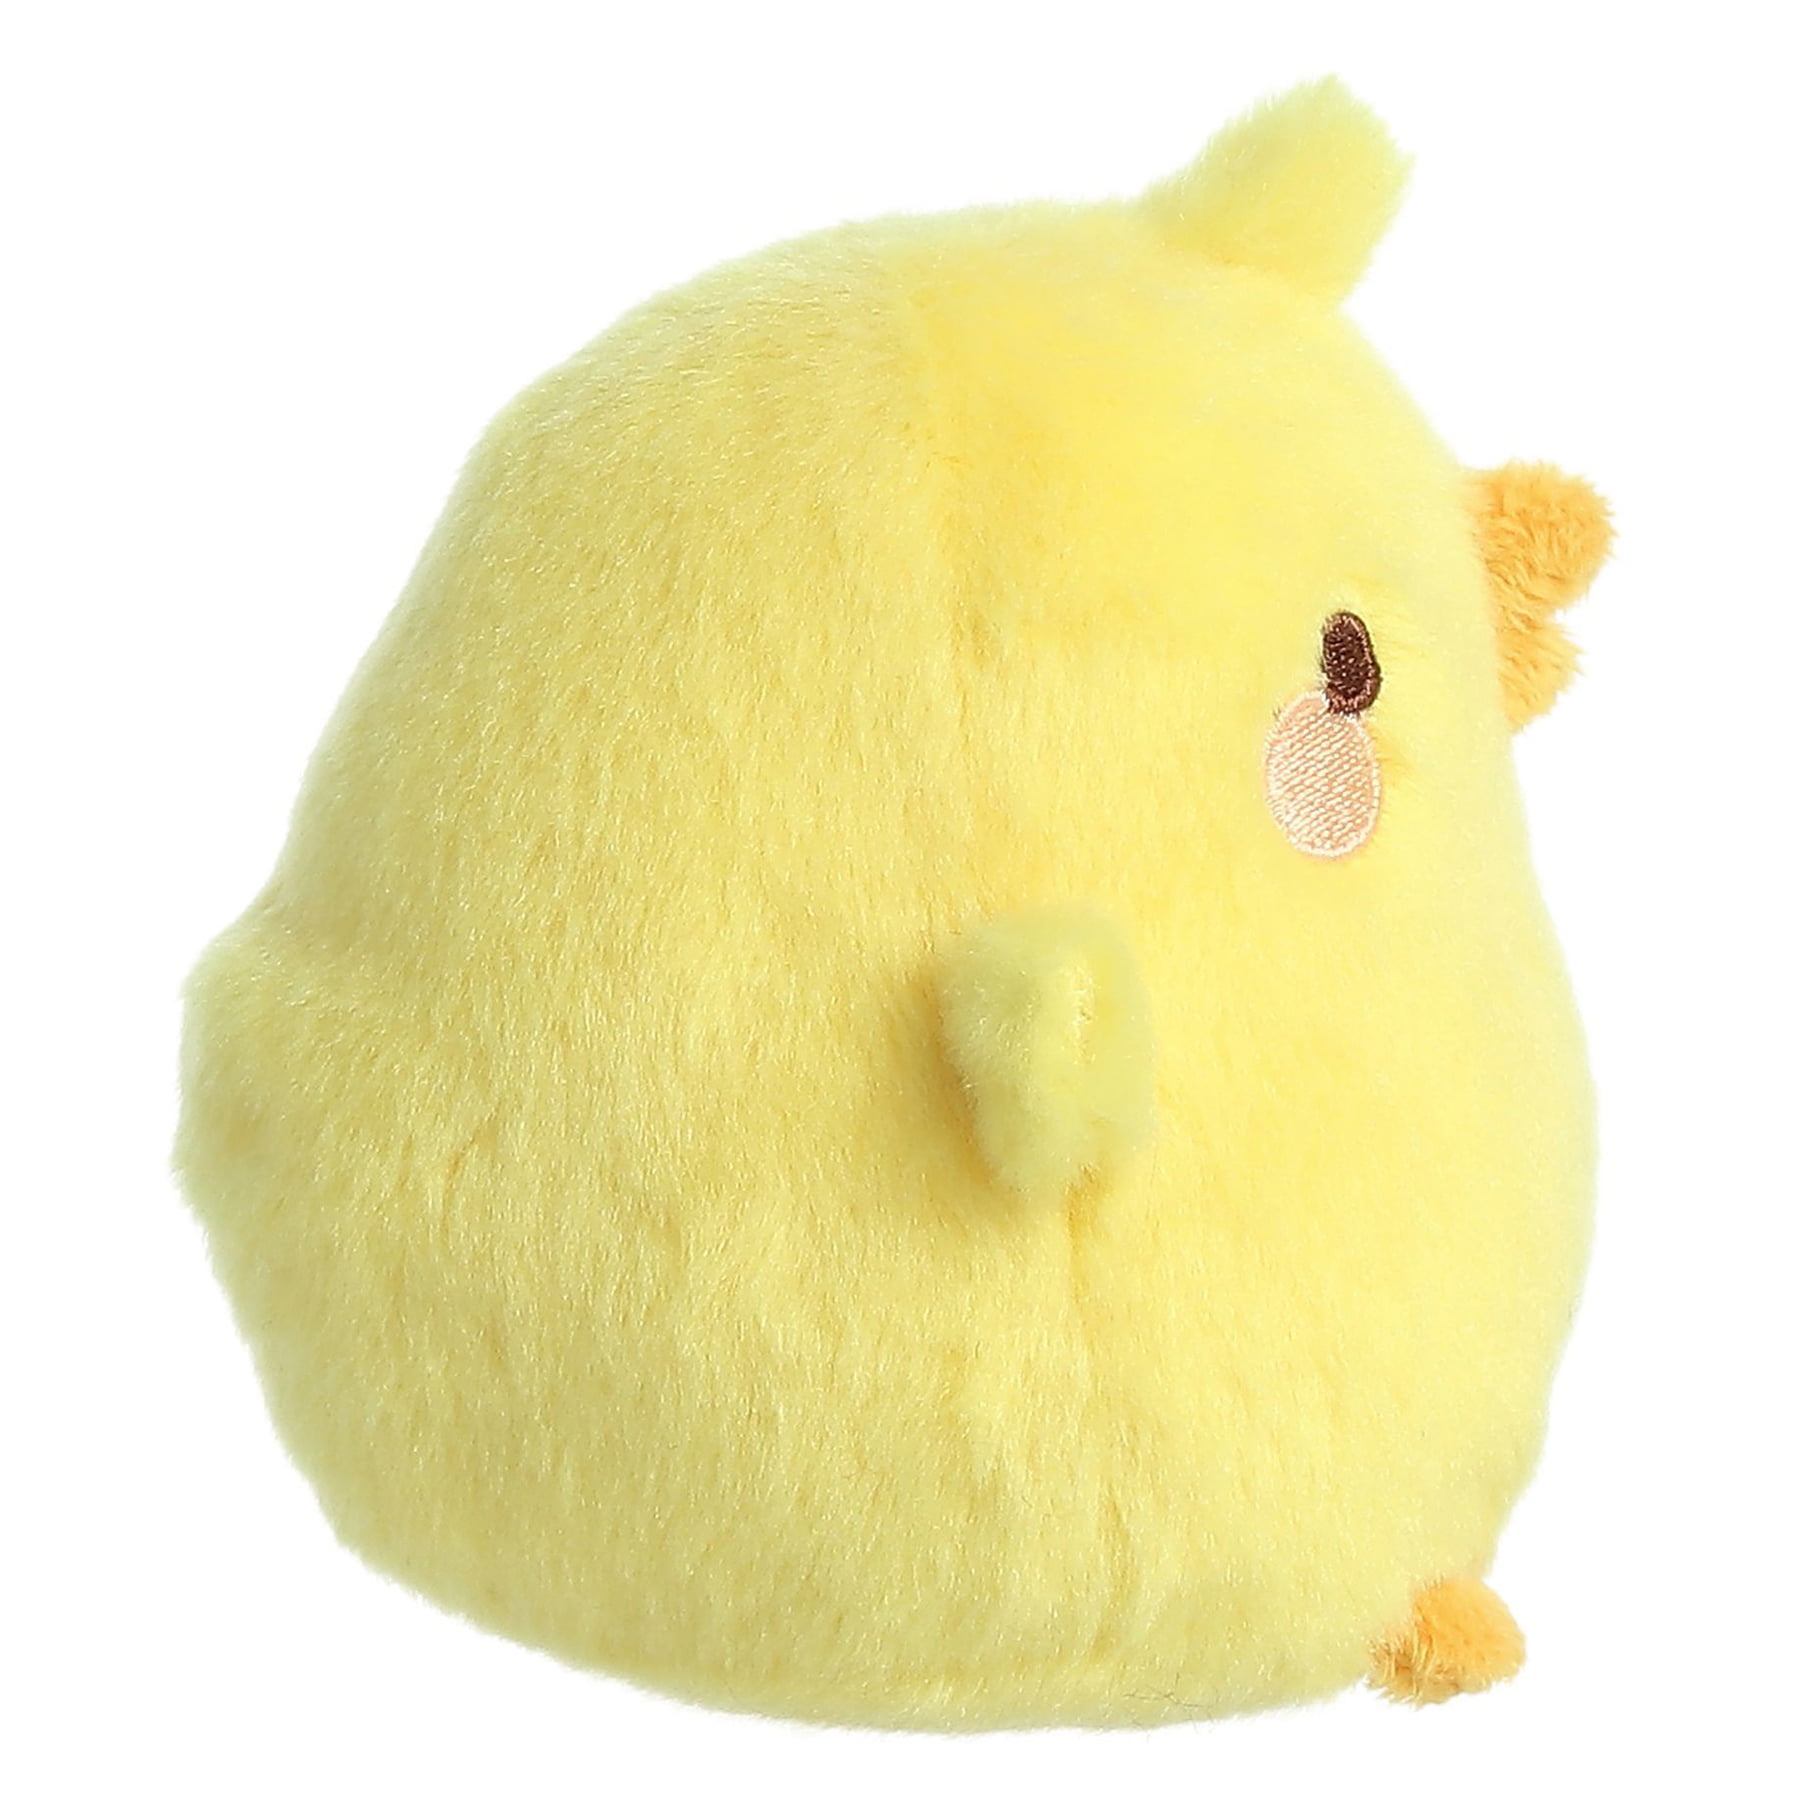 TheMogan 8" Duckling Little Duck Soft Plush Stuffed Animal Toy Gift Yellow NEW 